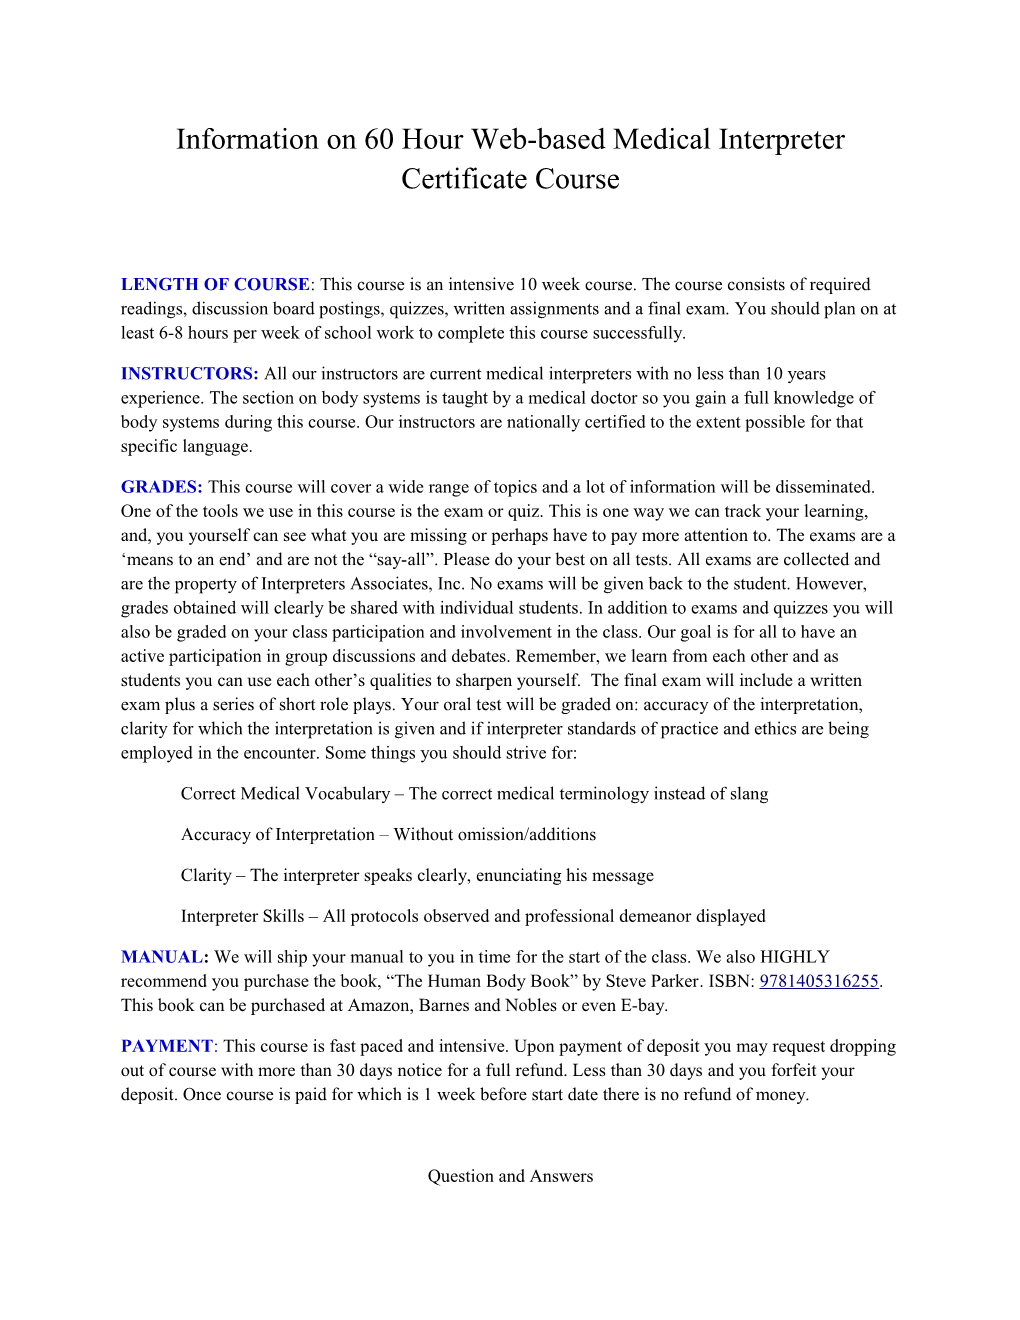 Information on 60 Hour Web-Based Medical Interpreter Certificate Course